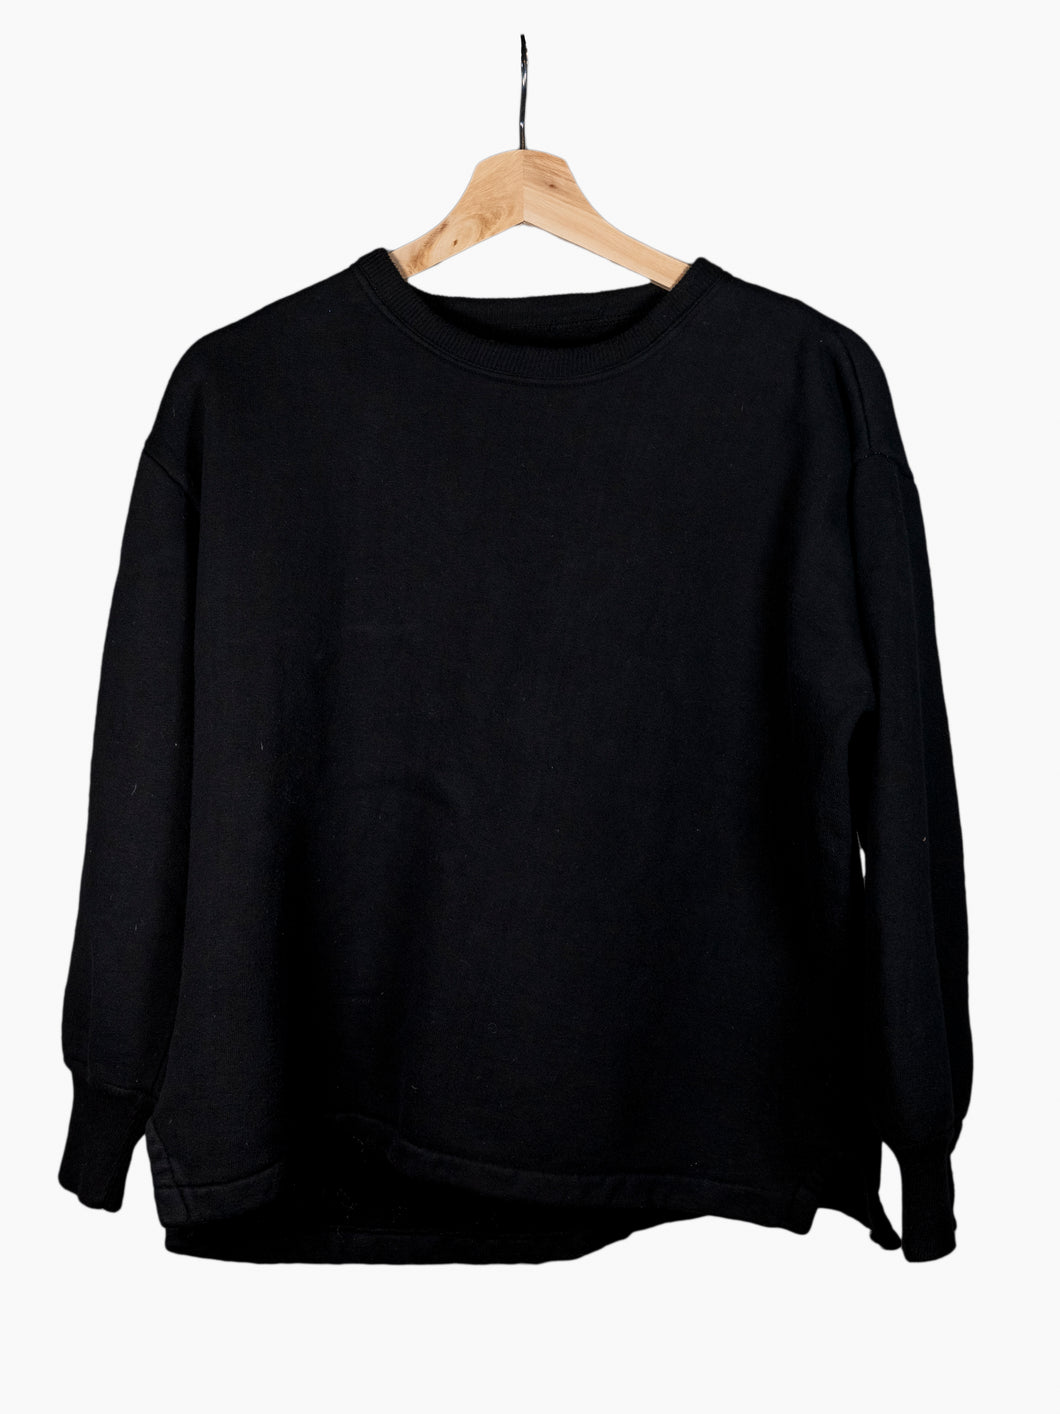 French Sweatshirt in Black